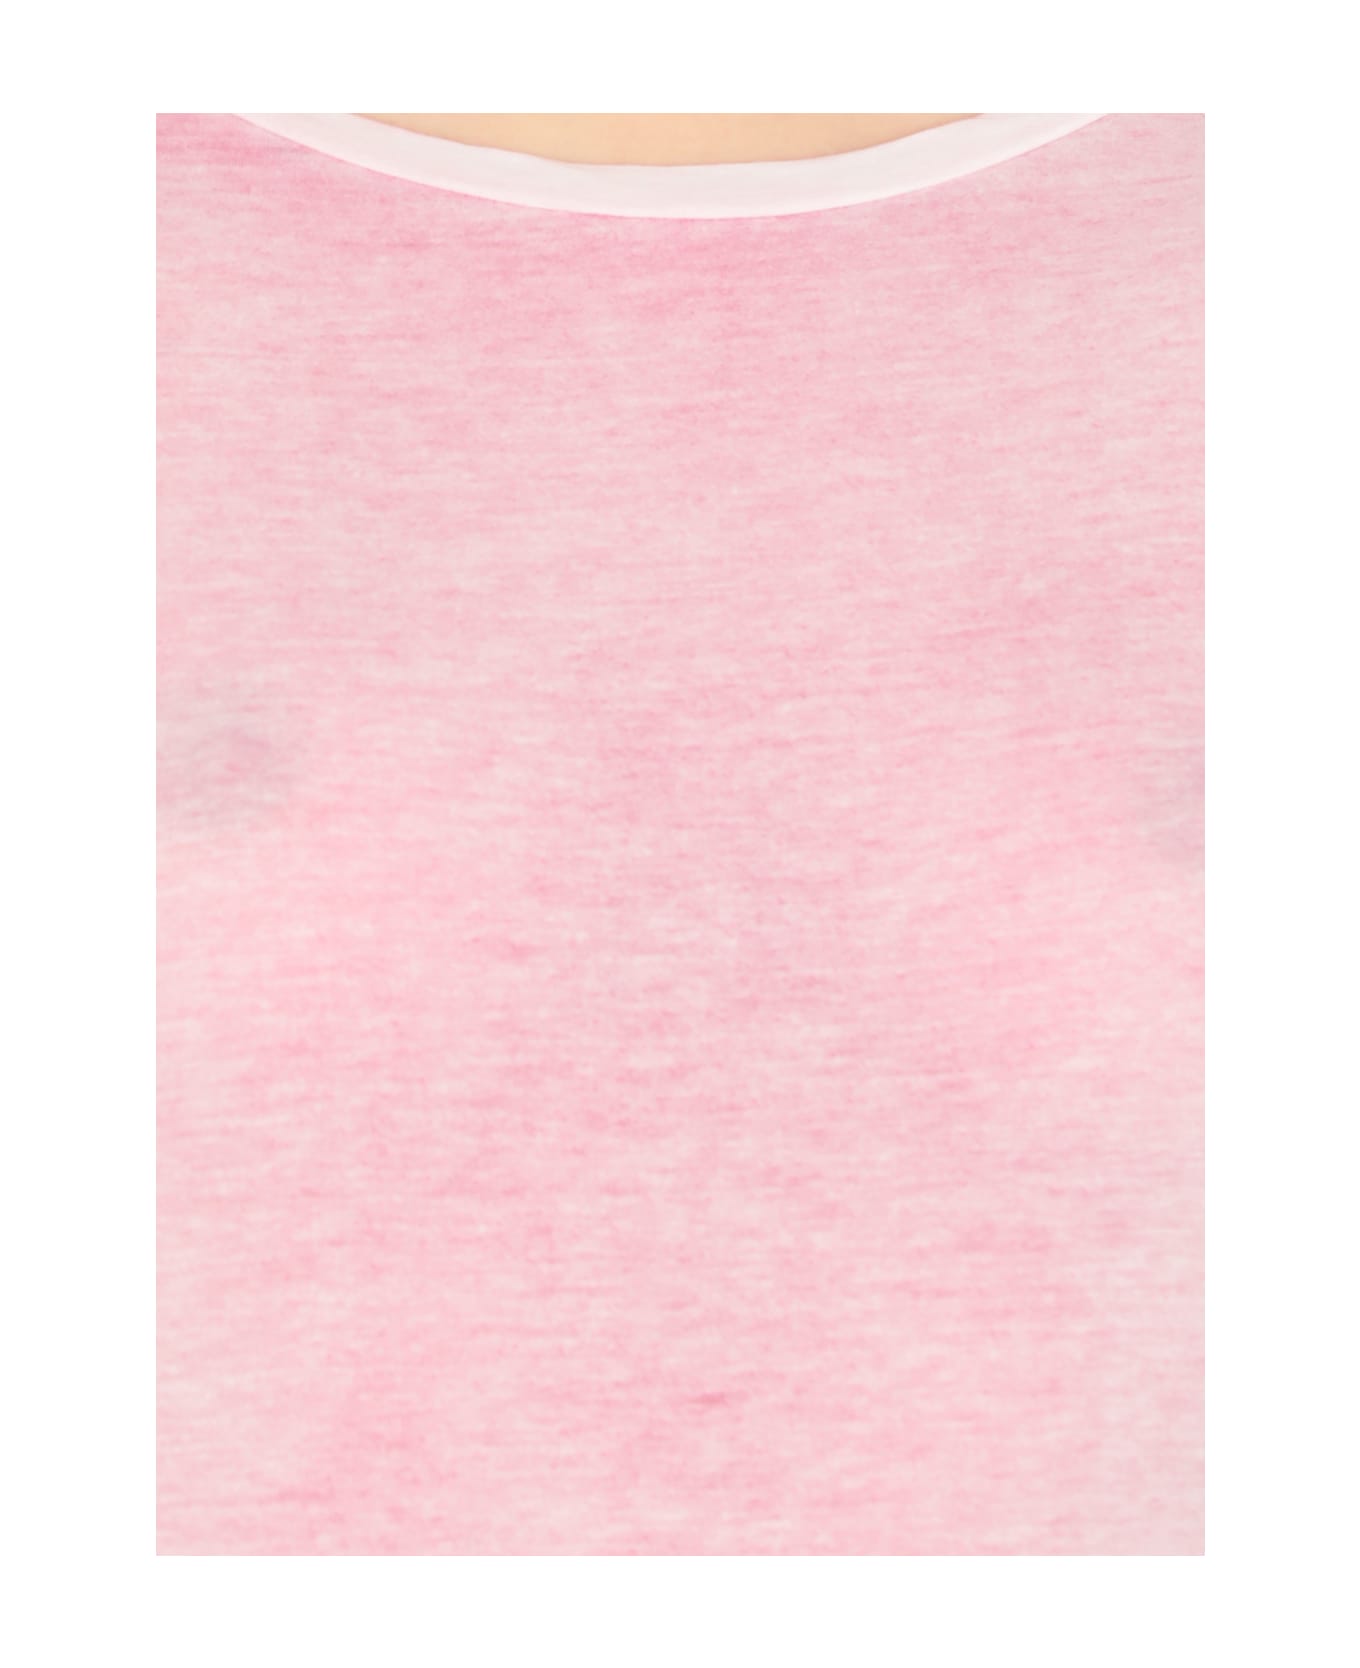 Avant Toi Cotton Shirt - Pink